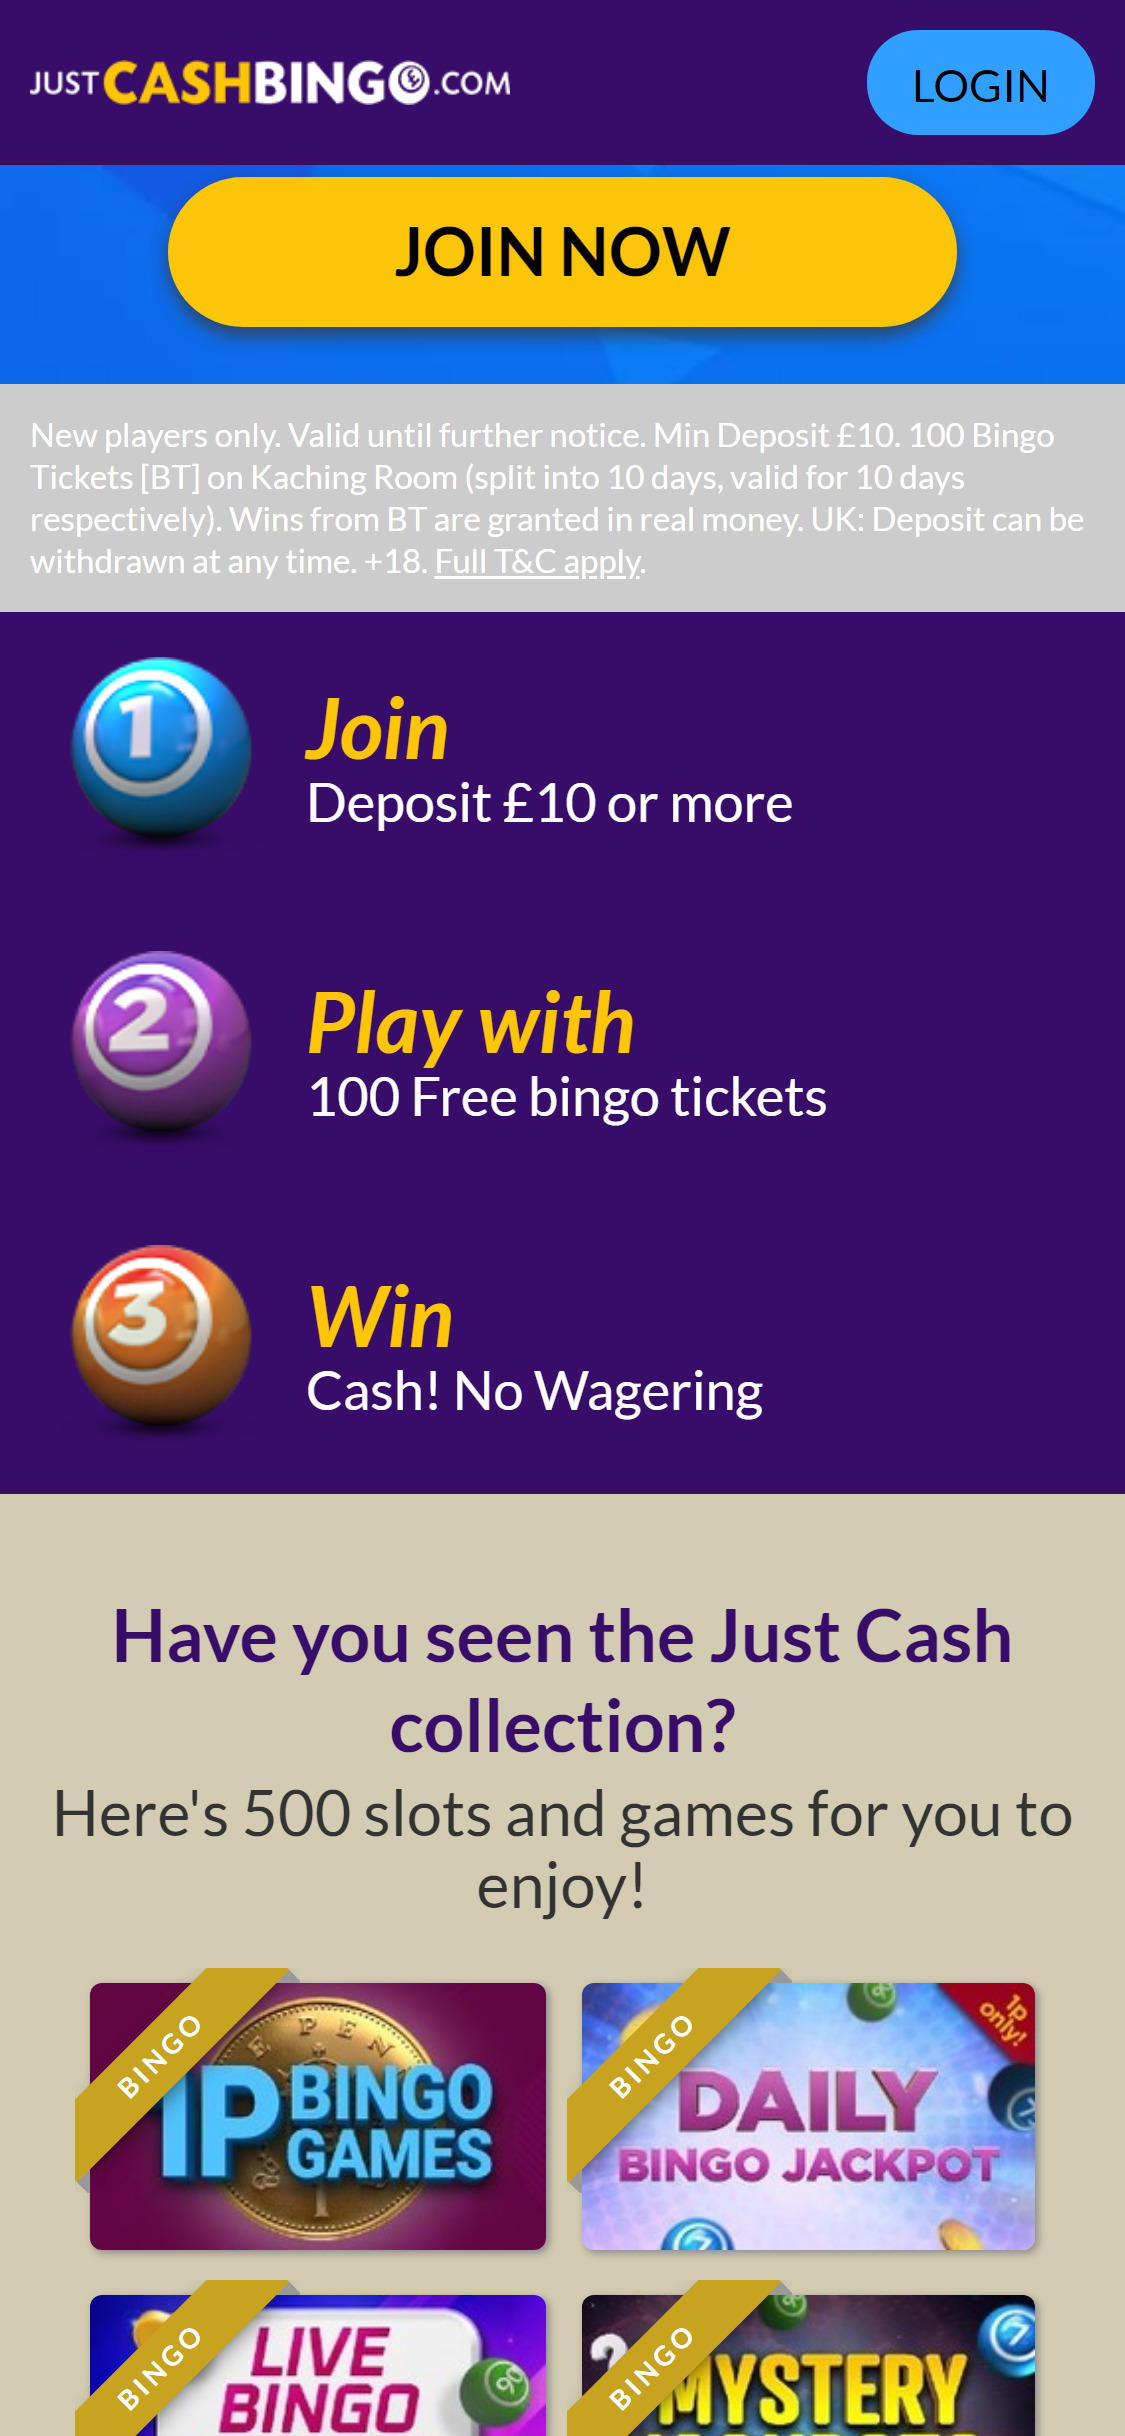 Just Cash Bingo Casino Mobile No Deposit Bonus Review